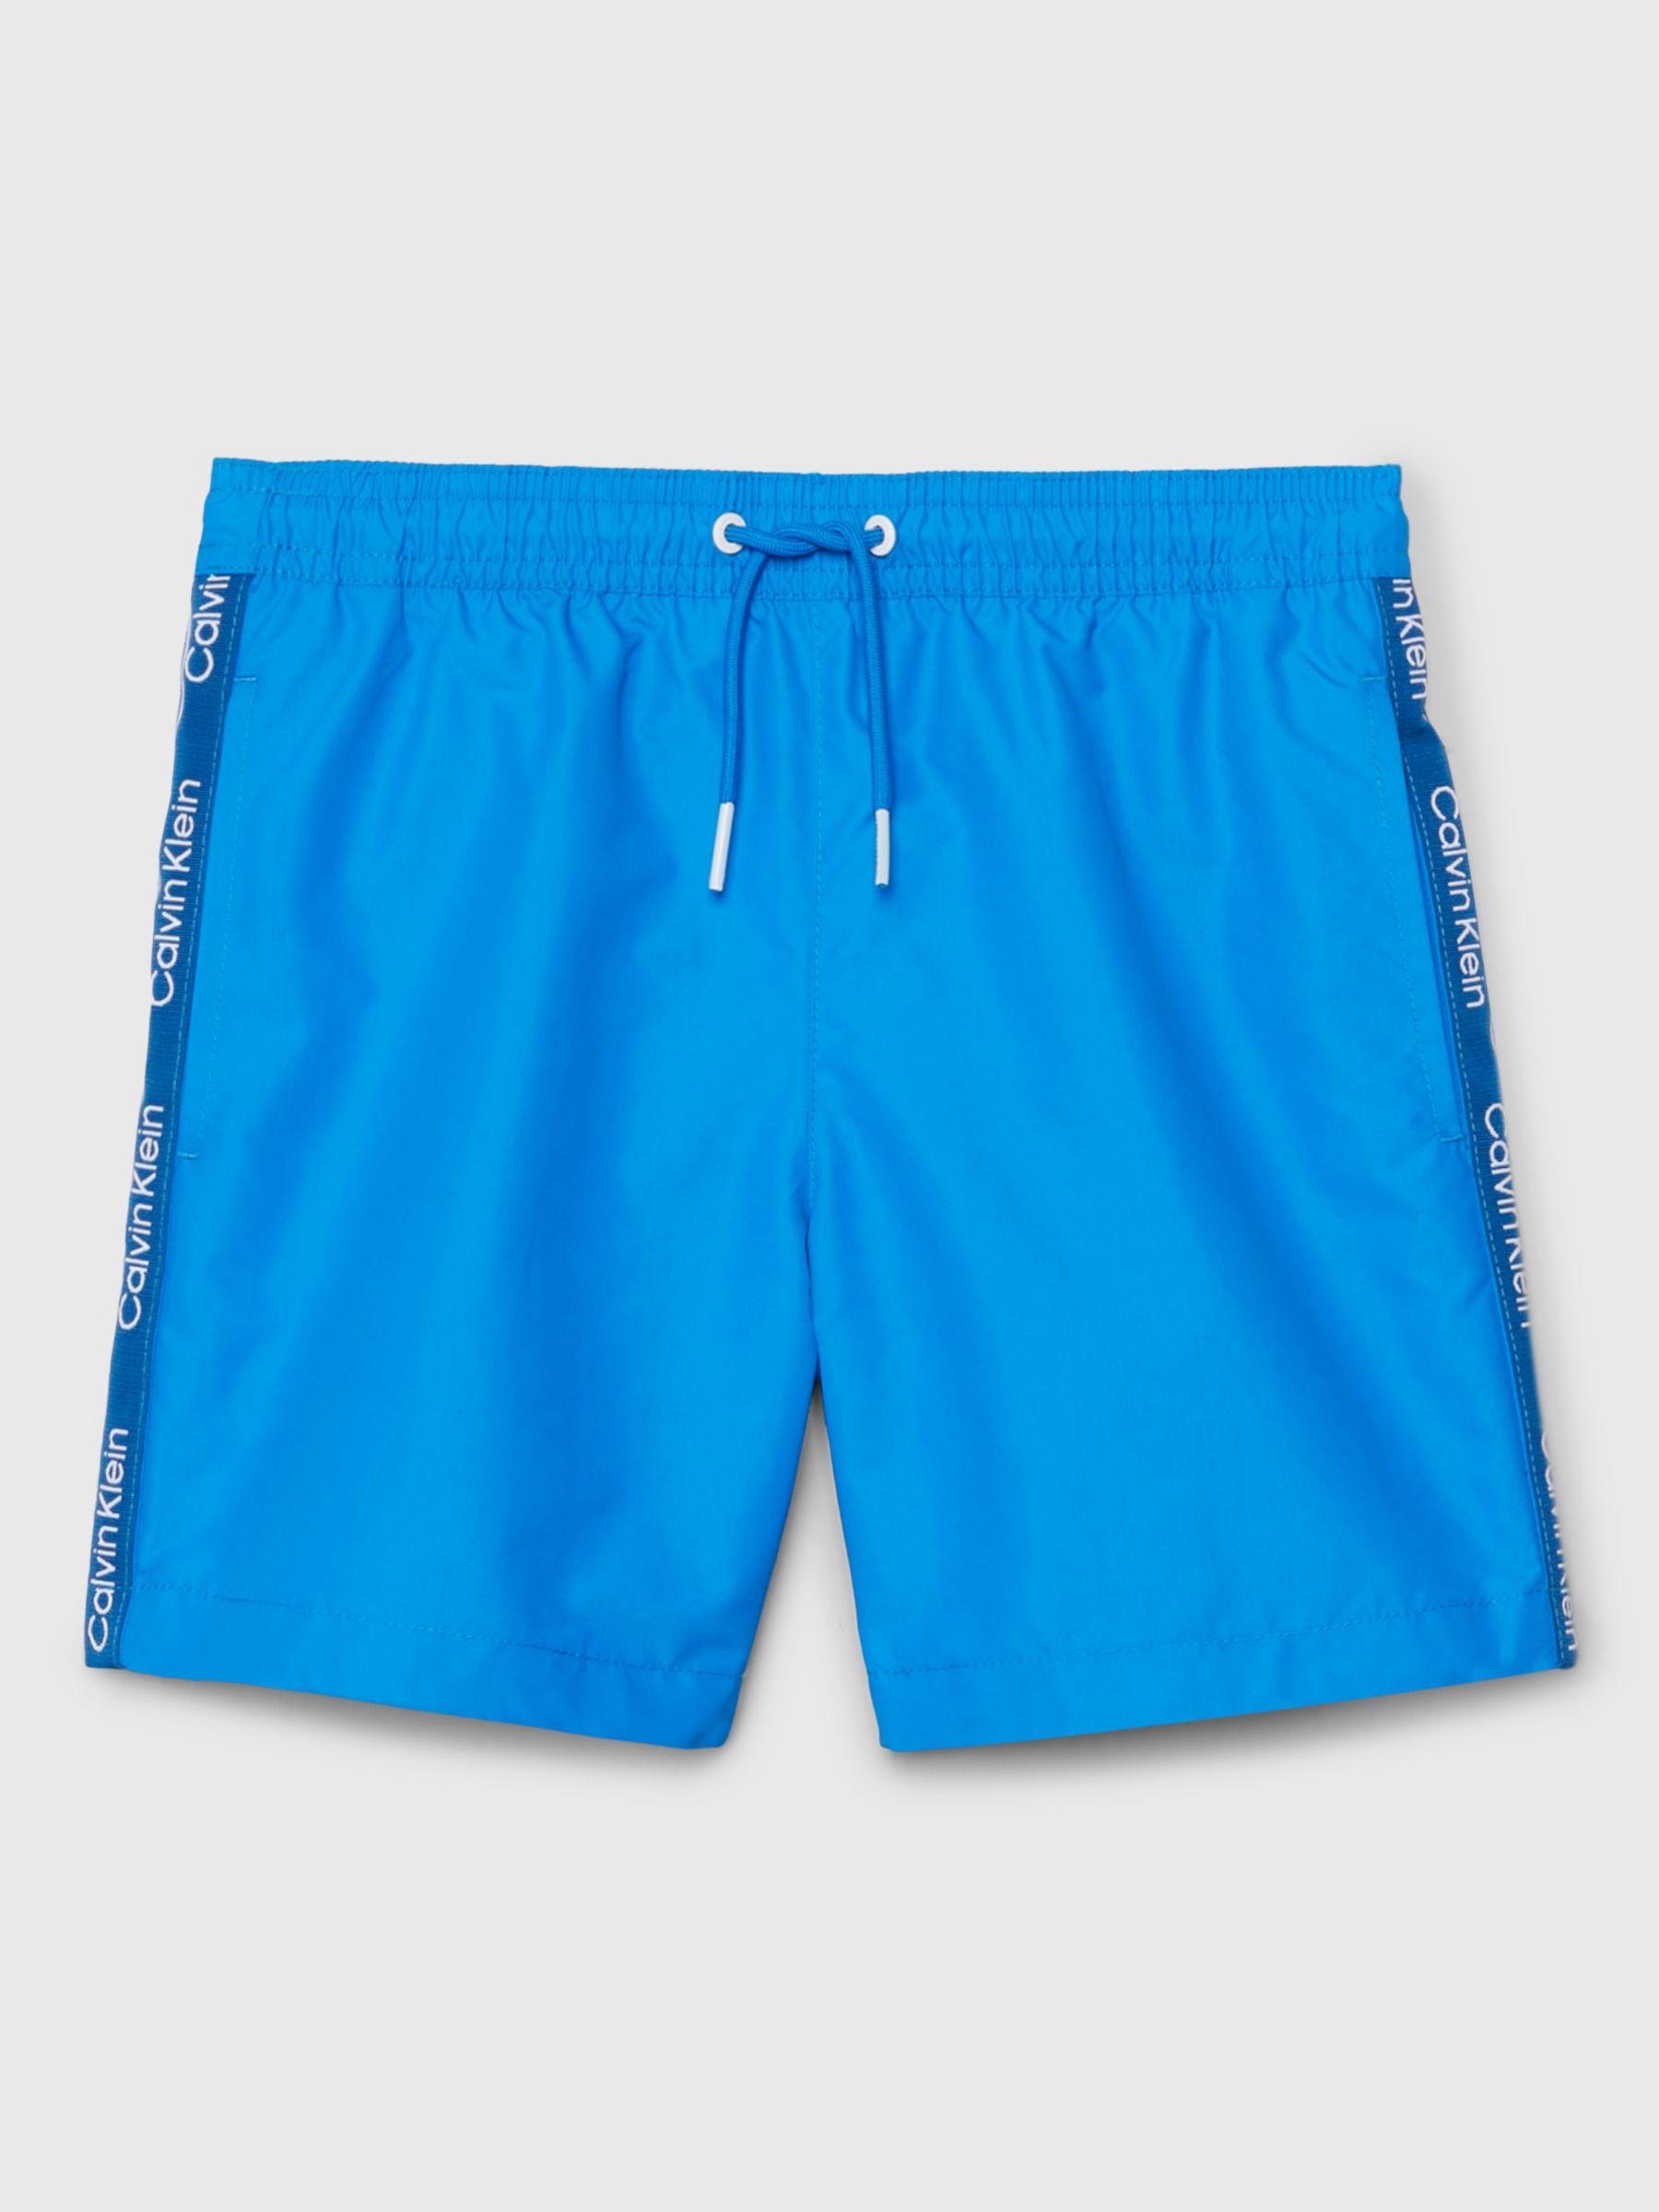 Calvin Klein Kids' Logo Swim Shorts, Ocean Hue, 10-12 years